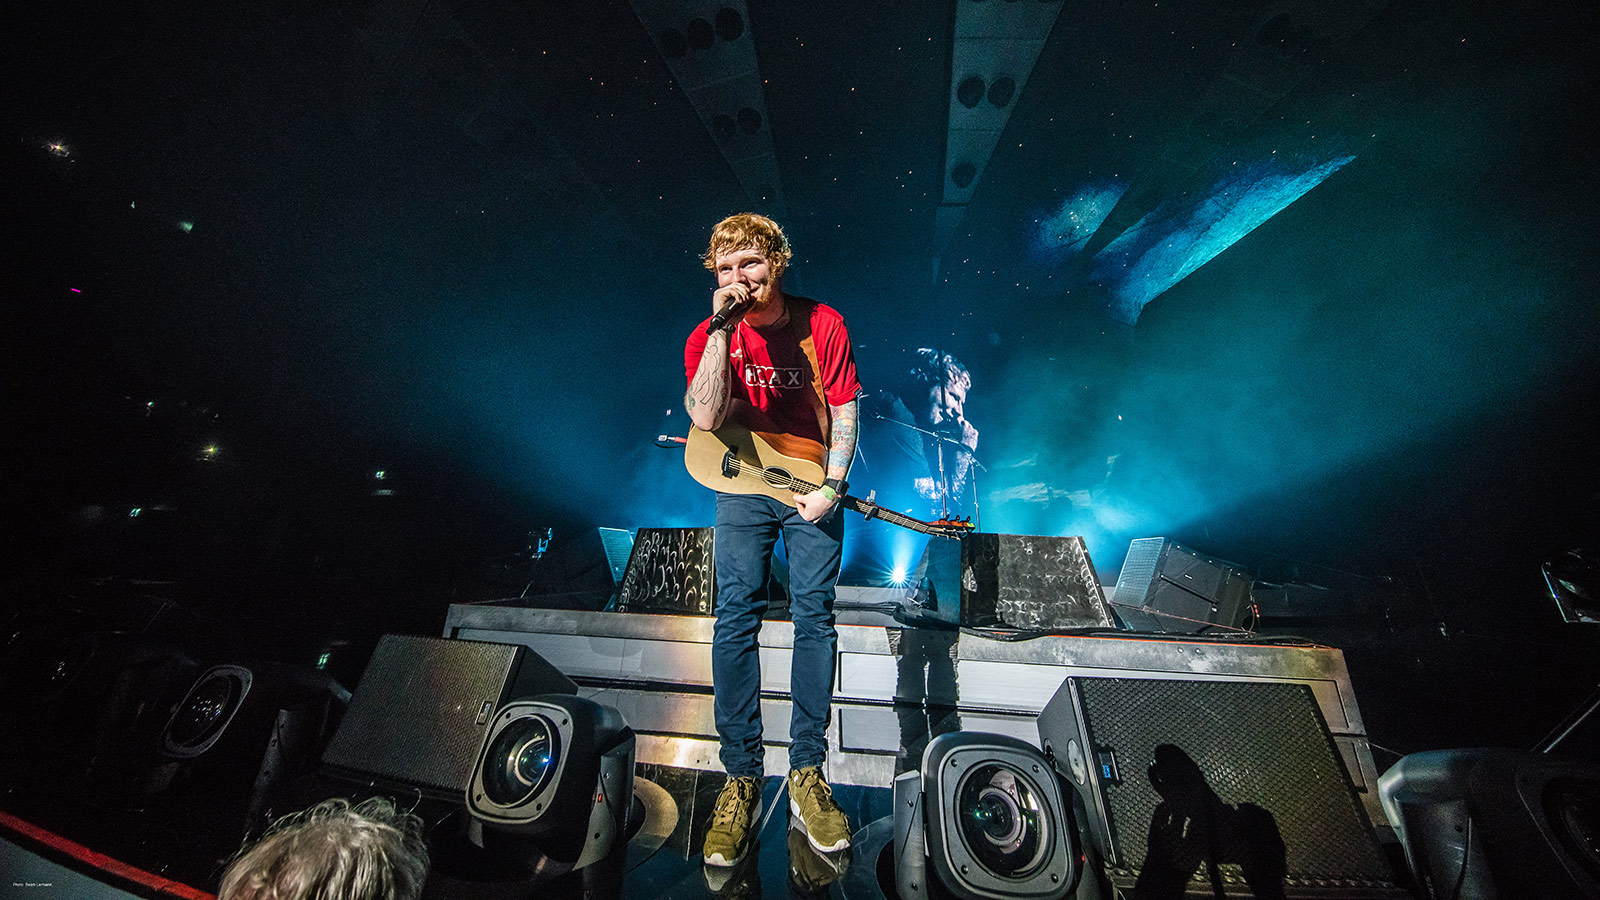 Ed Sheeran Divide Tour at the Ziggo Dome, Amsterdam